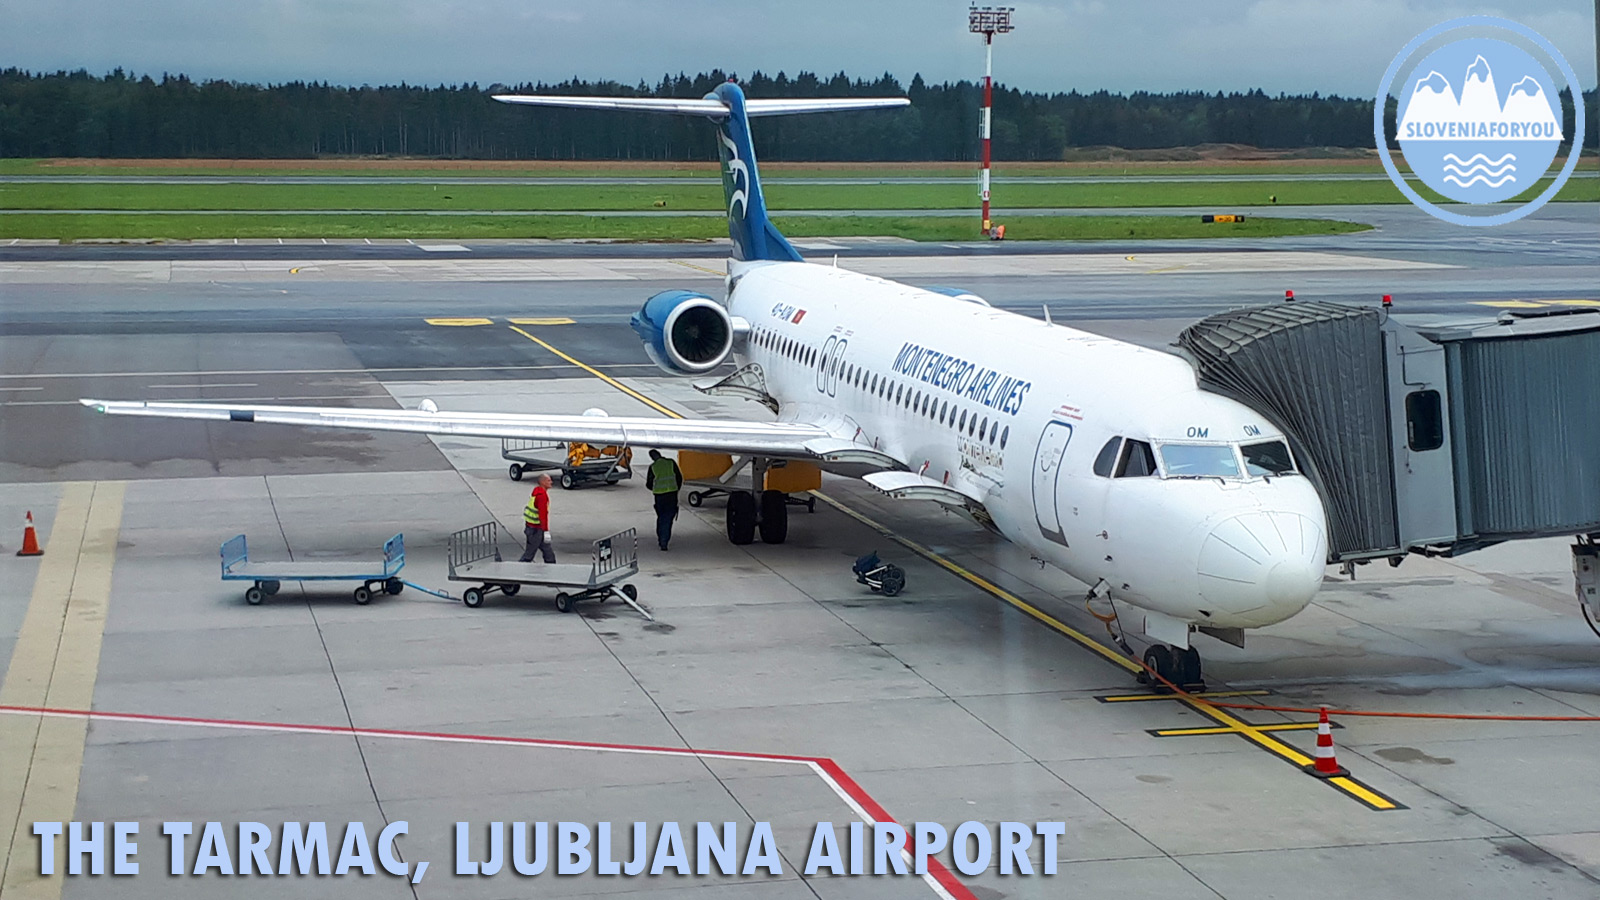 Airline at Ljubljana Airport, Sloveniaforyou